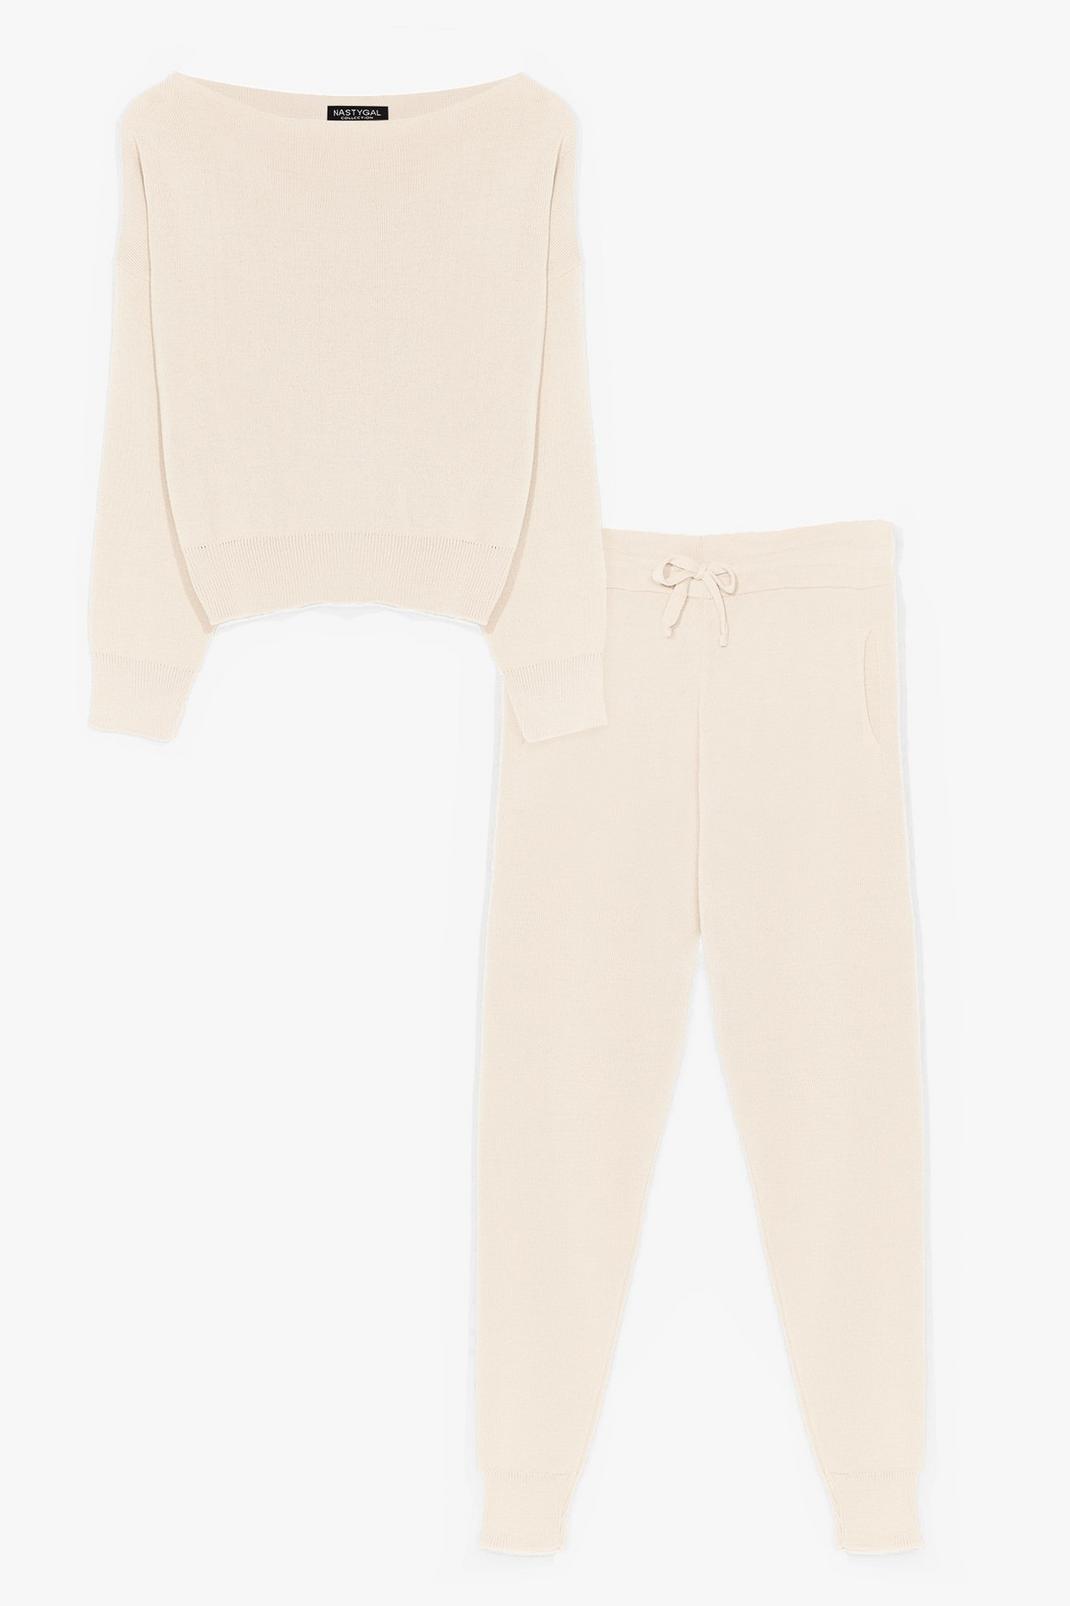 Vanilla Soft Knit SweatTrousers Loungewear Set image number 1